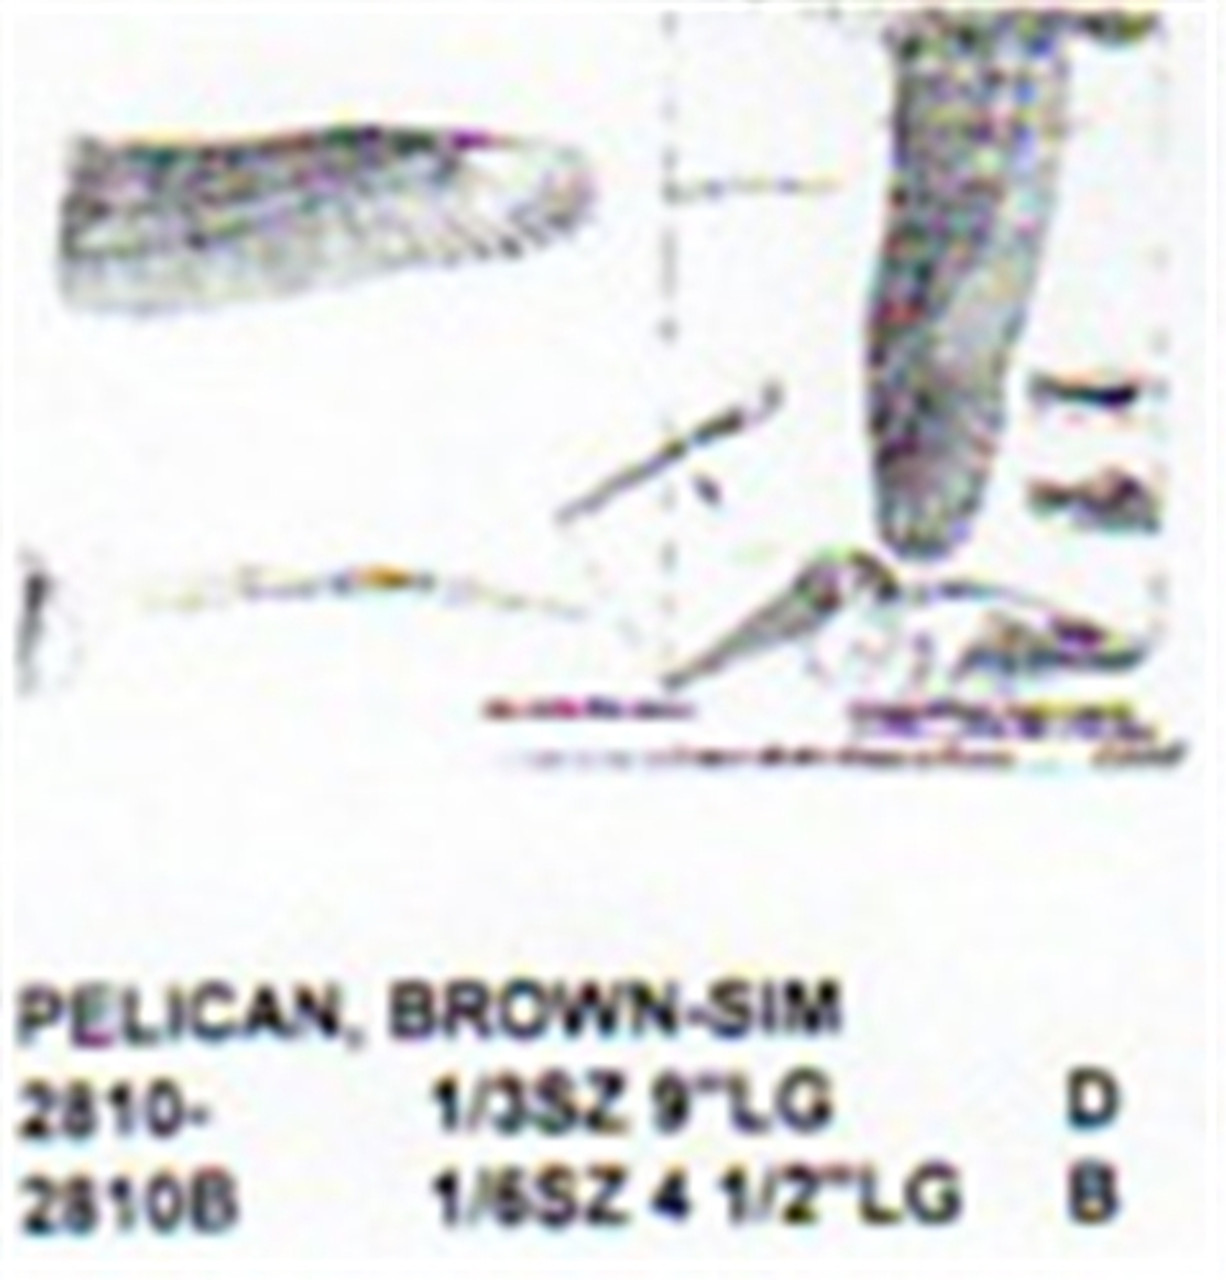 Brown Pelican Gliding 1/3 Size